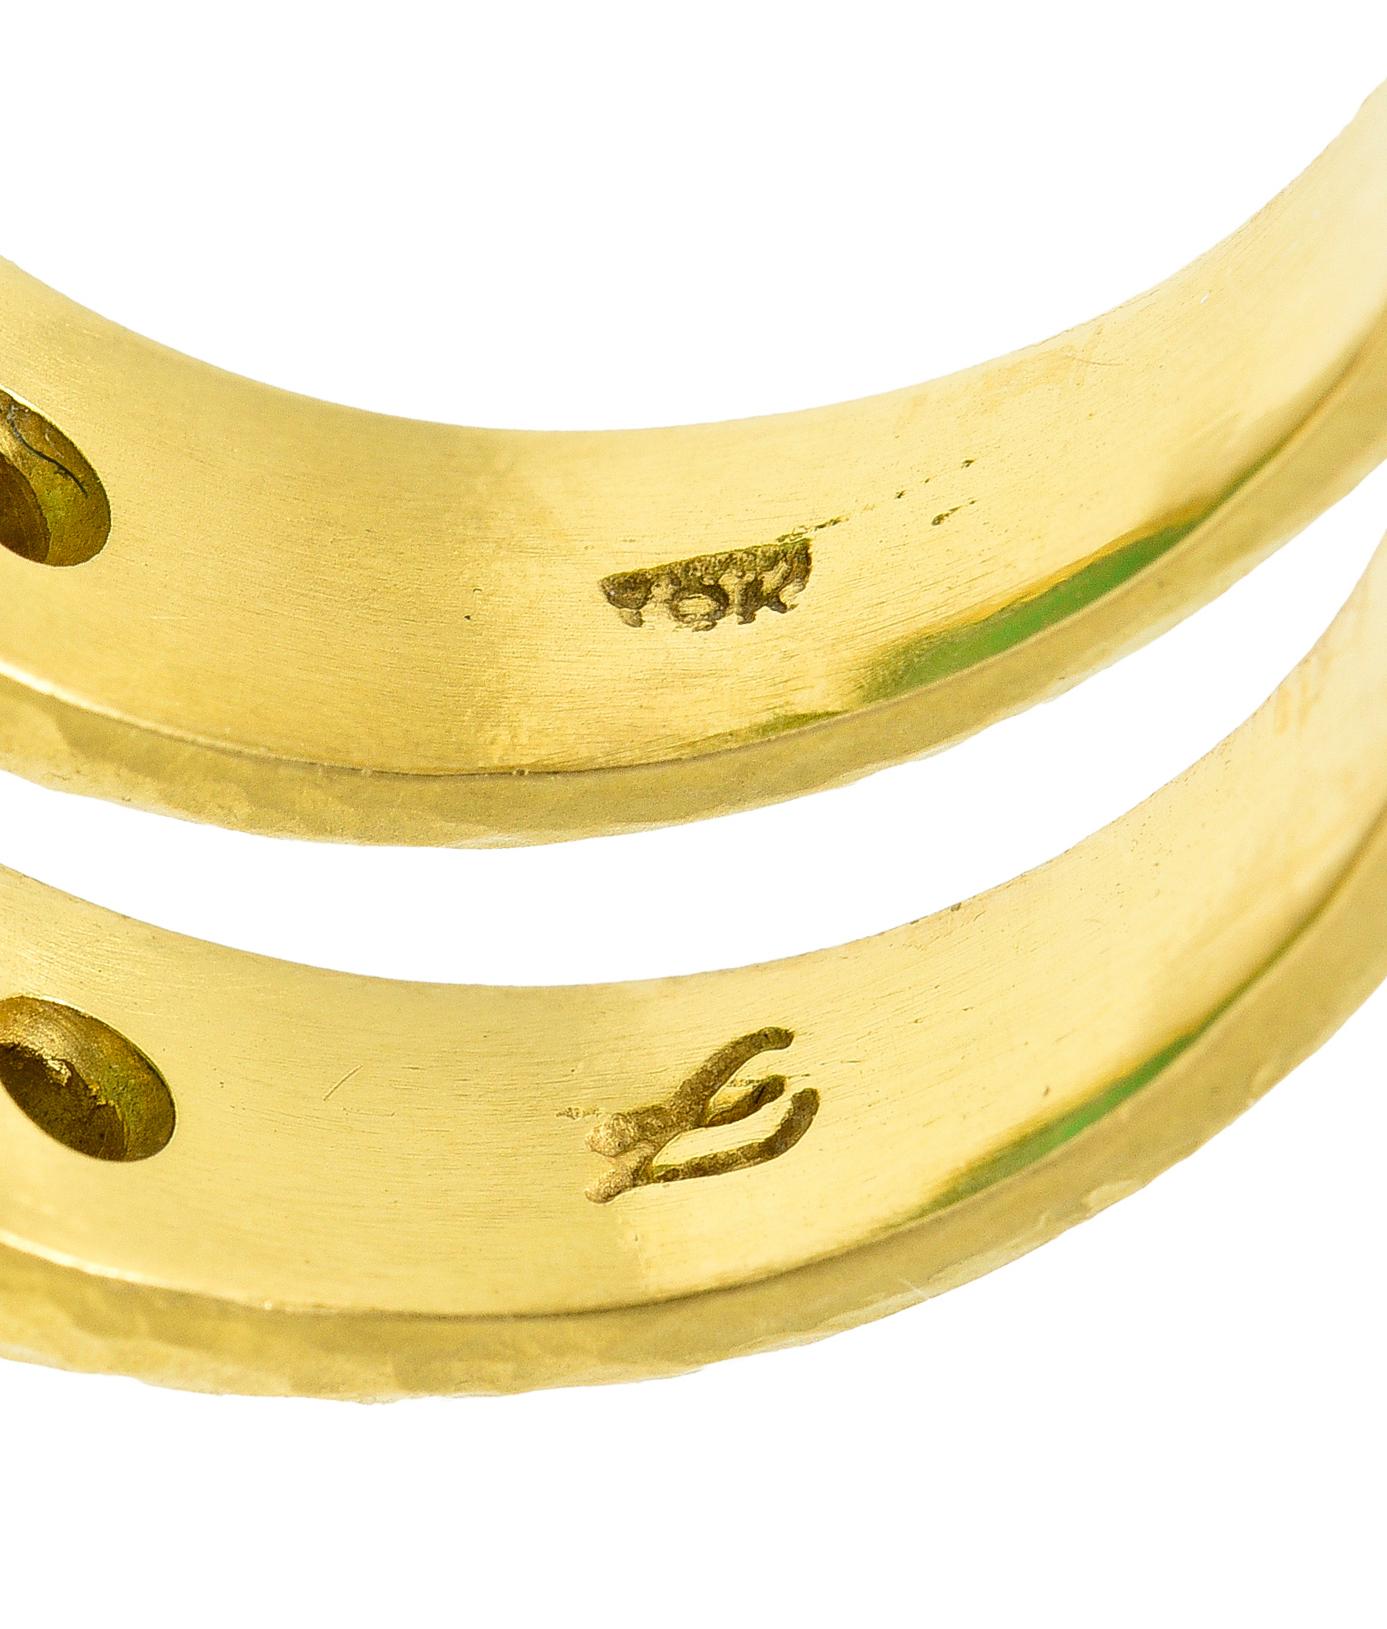 Elizabeth Locke Chrysoprase Tsavorite Garnet 19 Karat Yellow Gold Cocktail Ring For Sale 2